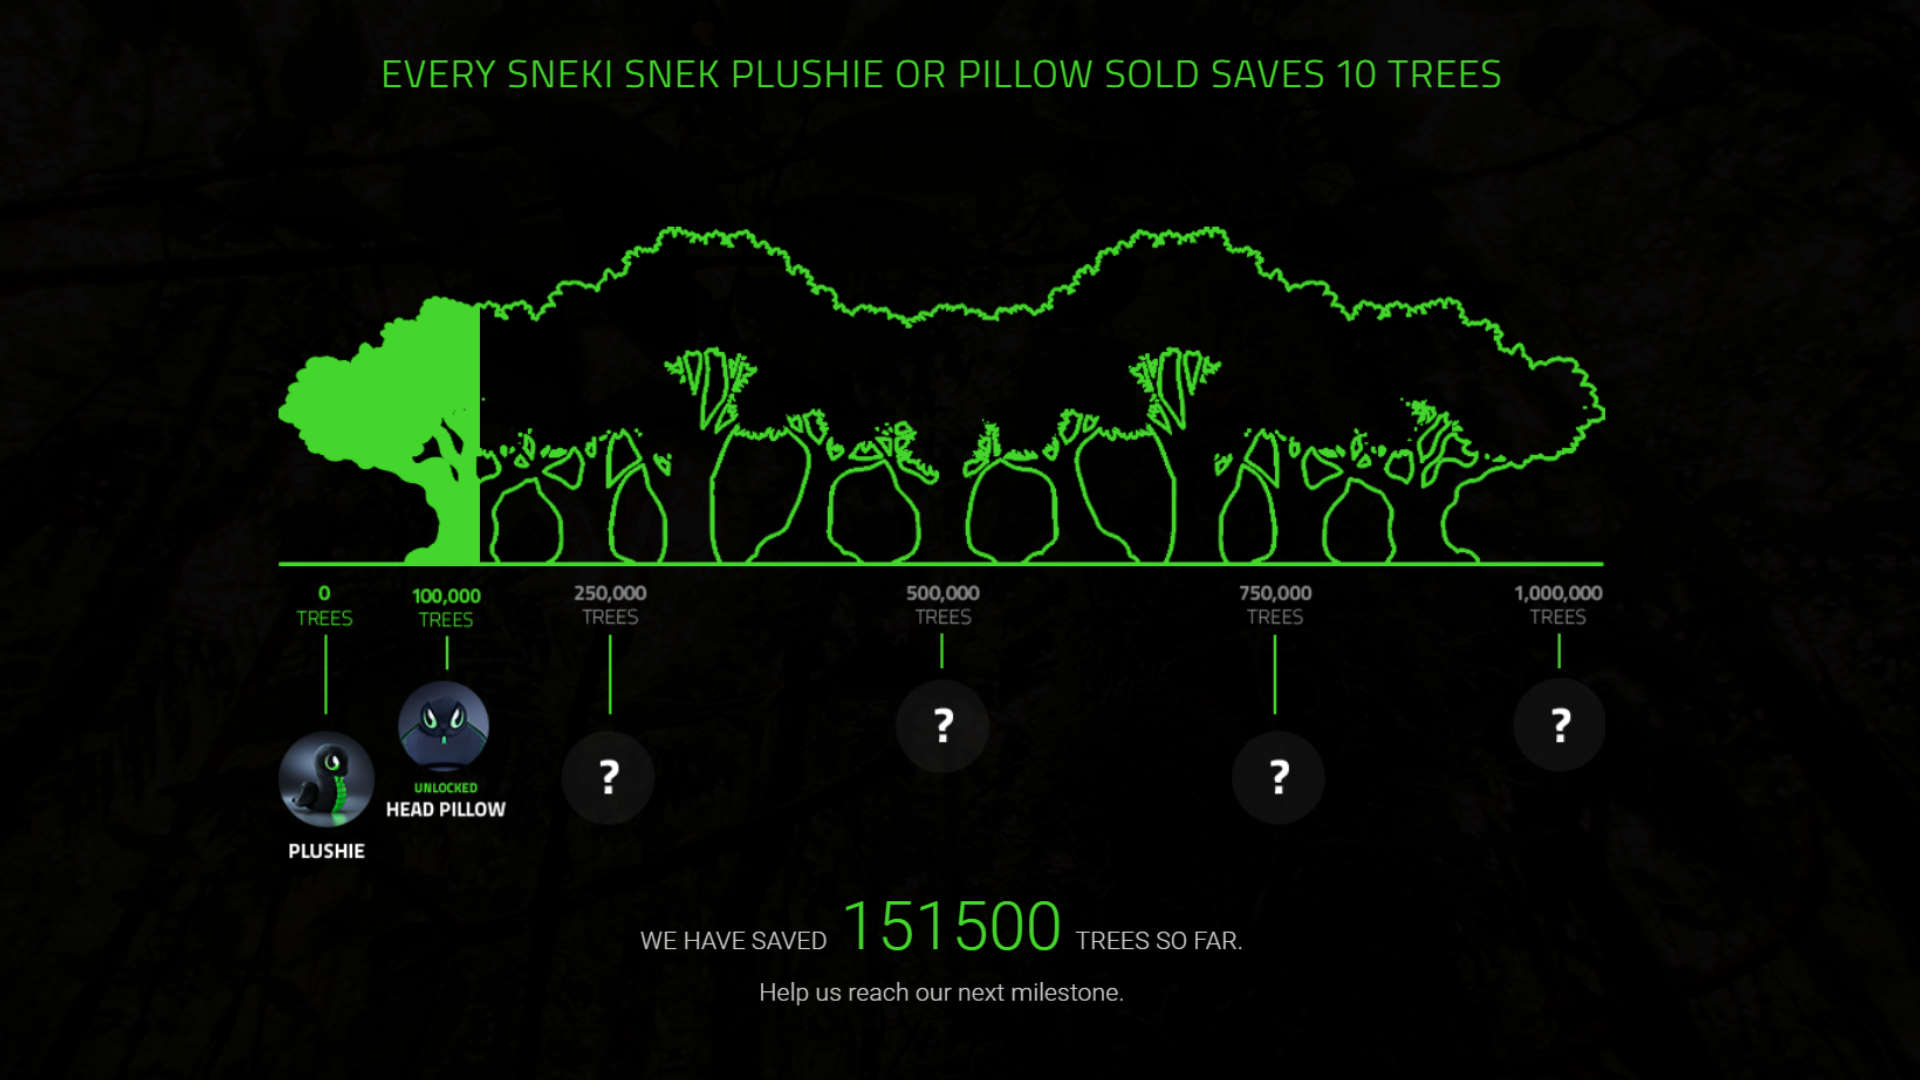 Razer's conservation initiative has saved 151,500 trees so far